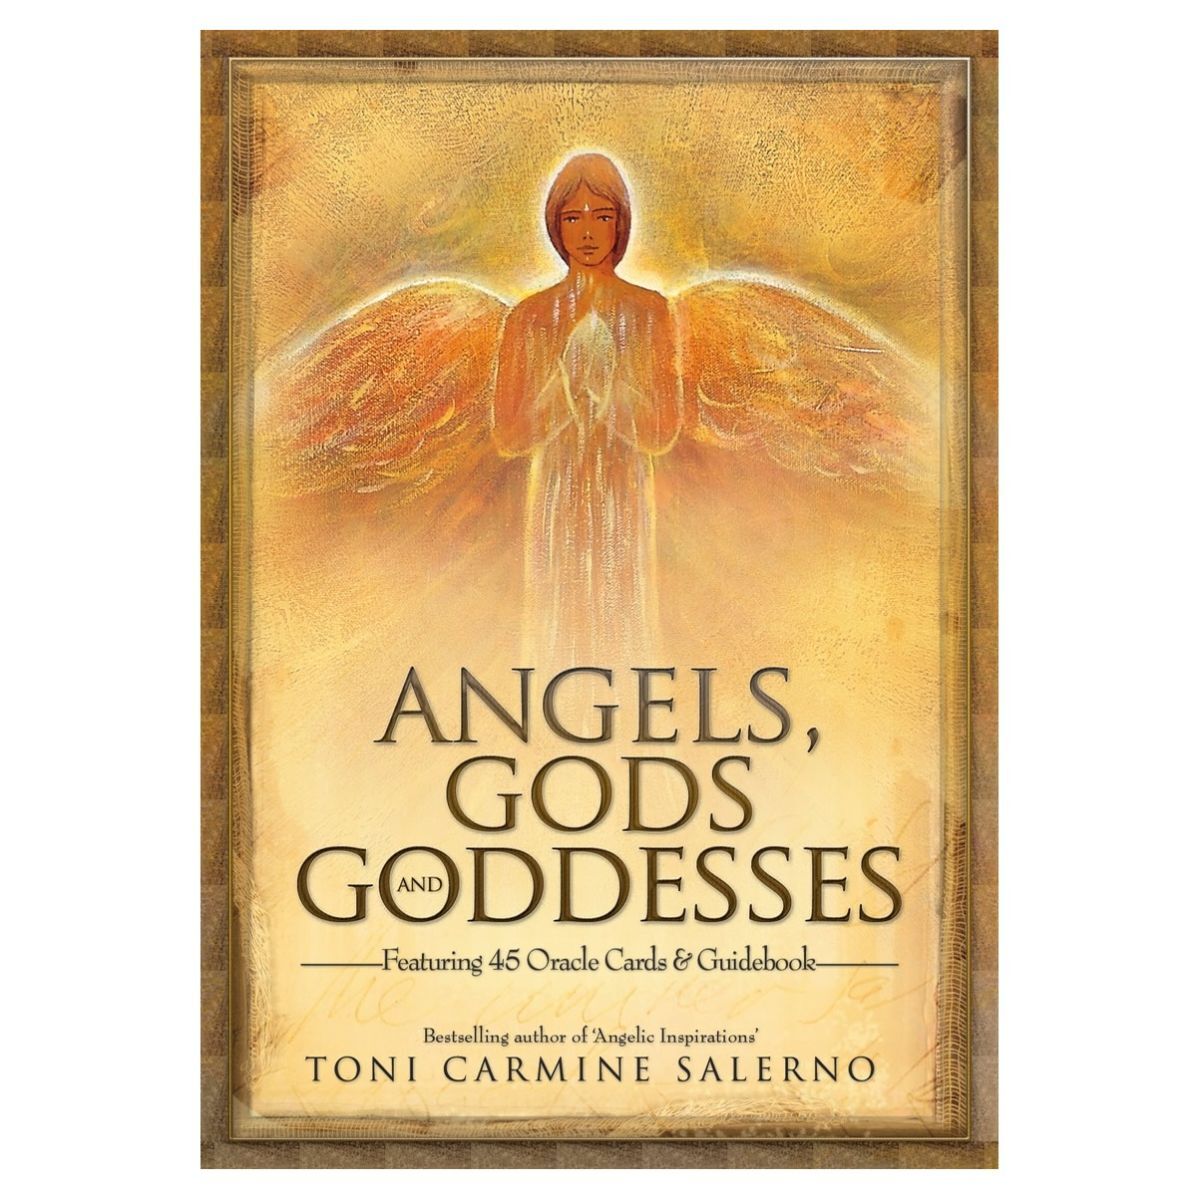 

Оракул "Ангелы, Боги и Богини" (Angels, Gods & Goddesses Oracle)